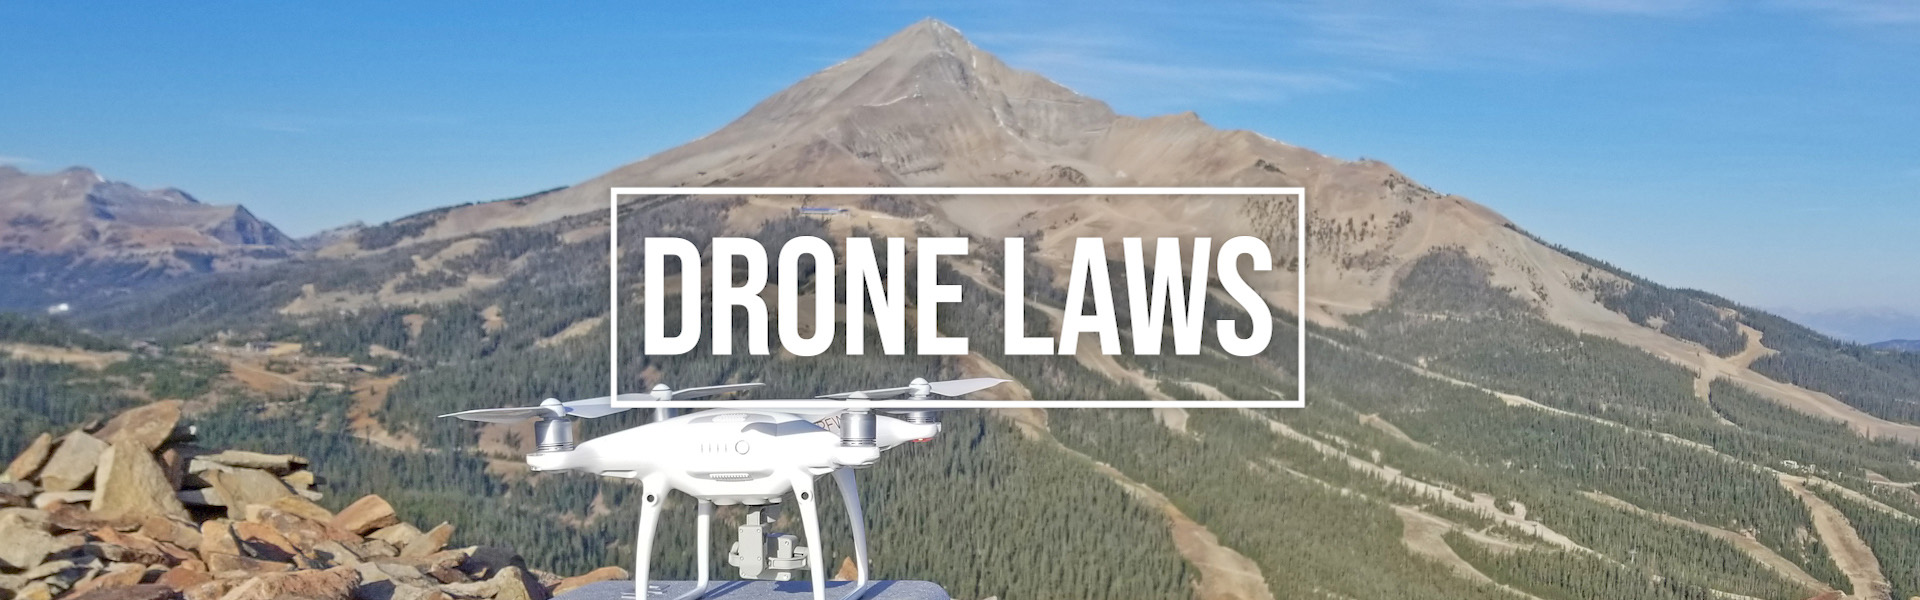 Montana Drone Laws Uav Rules